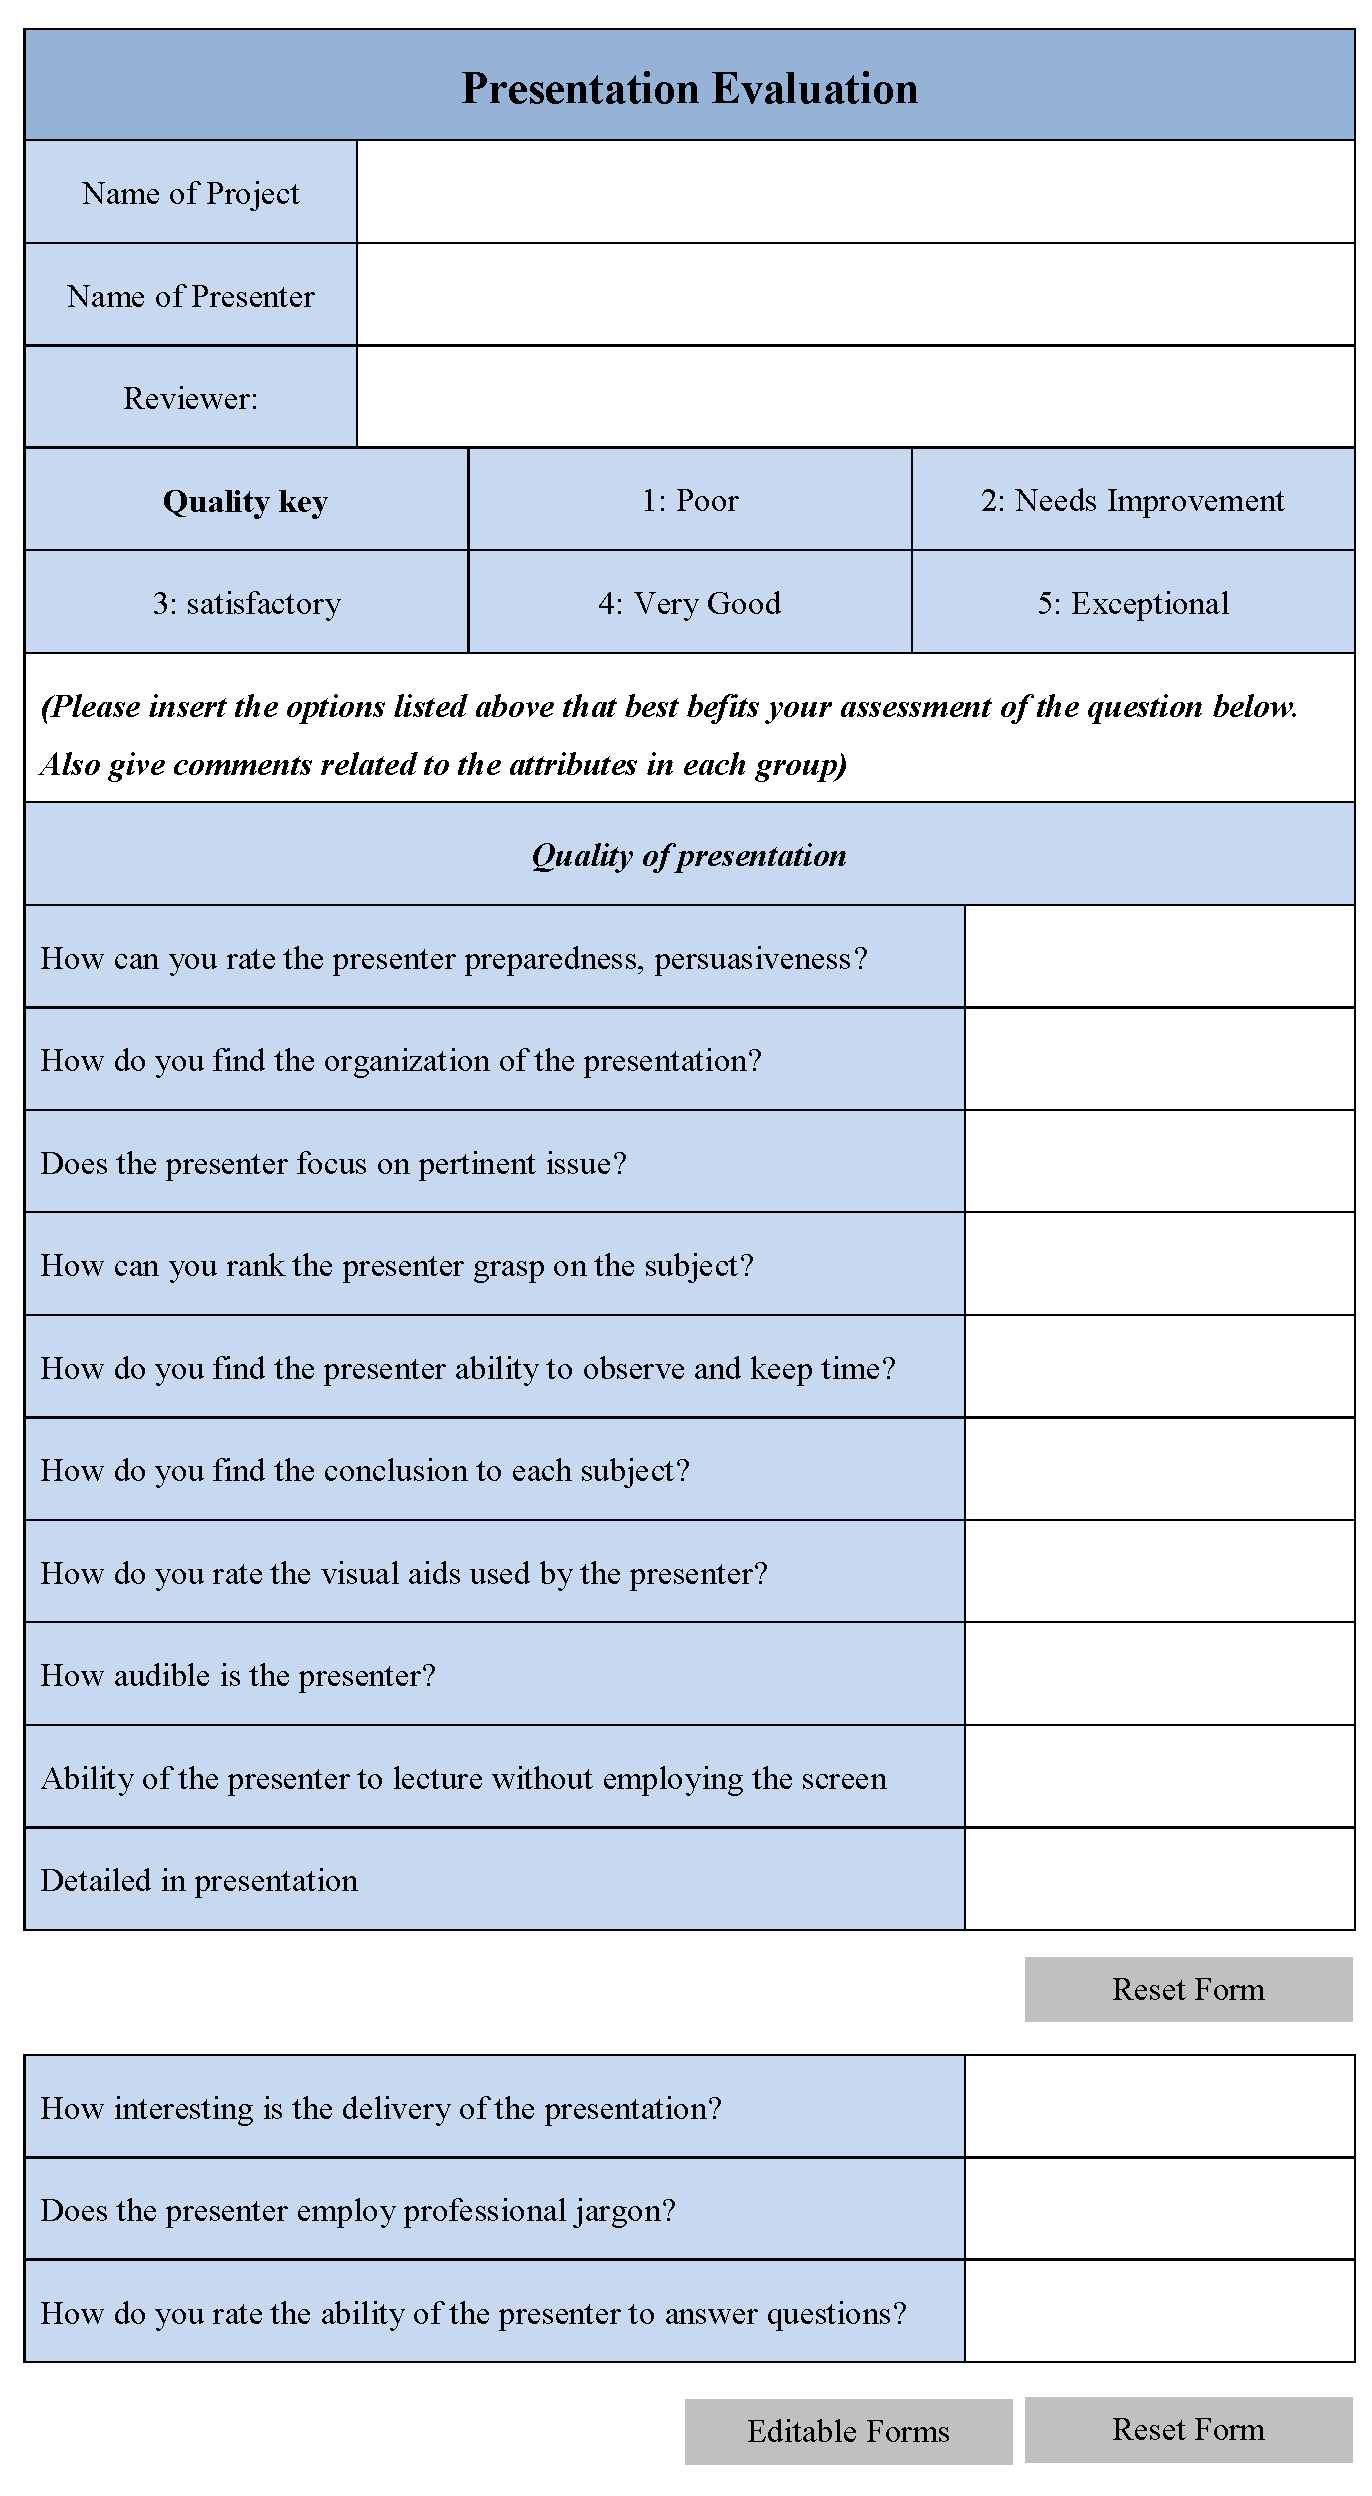 group presentation evaluation form pdf